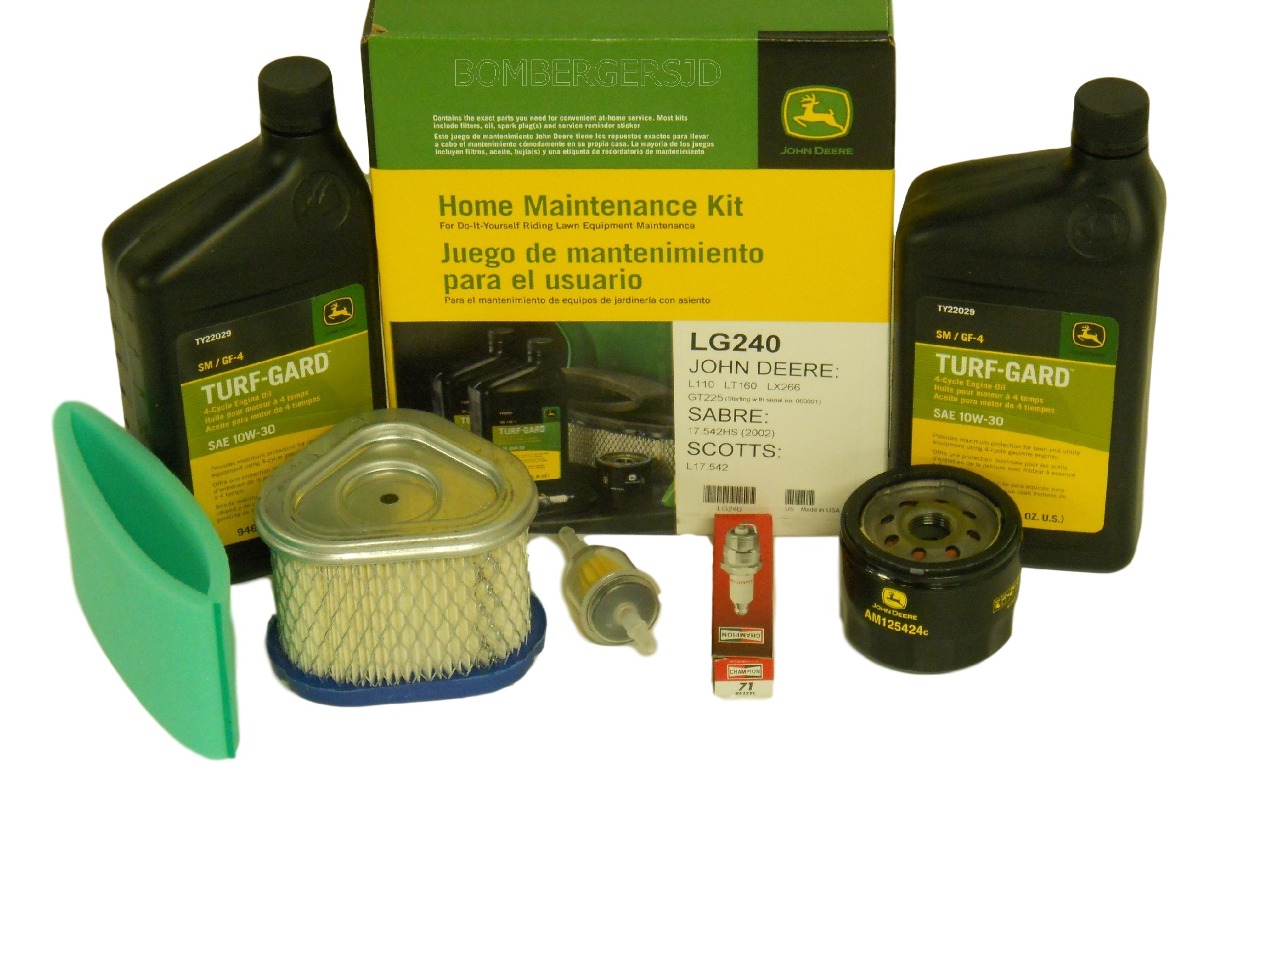 Details about John Deere Home Maintenance Service Kit LG240 L110 GT225 ...